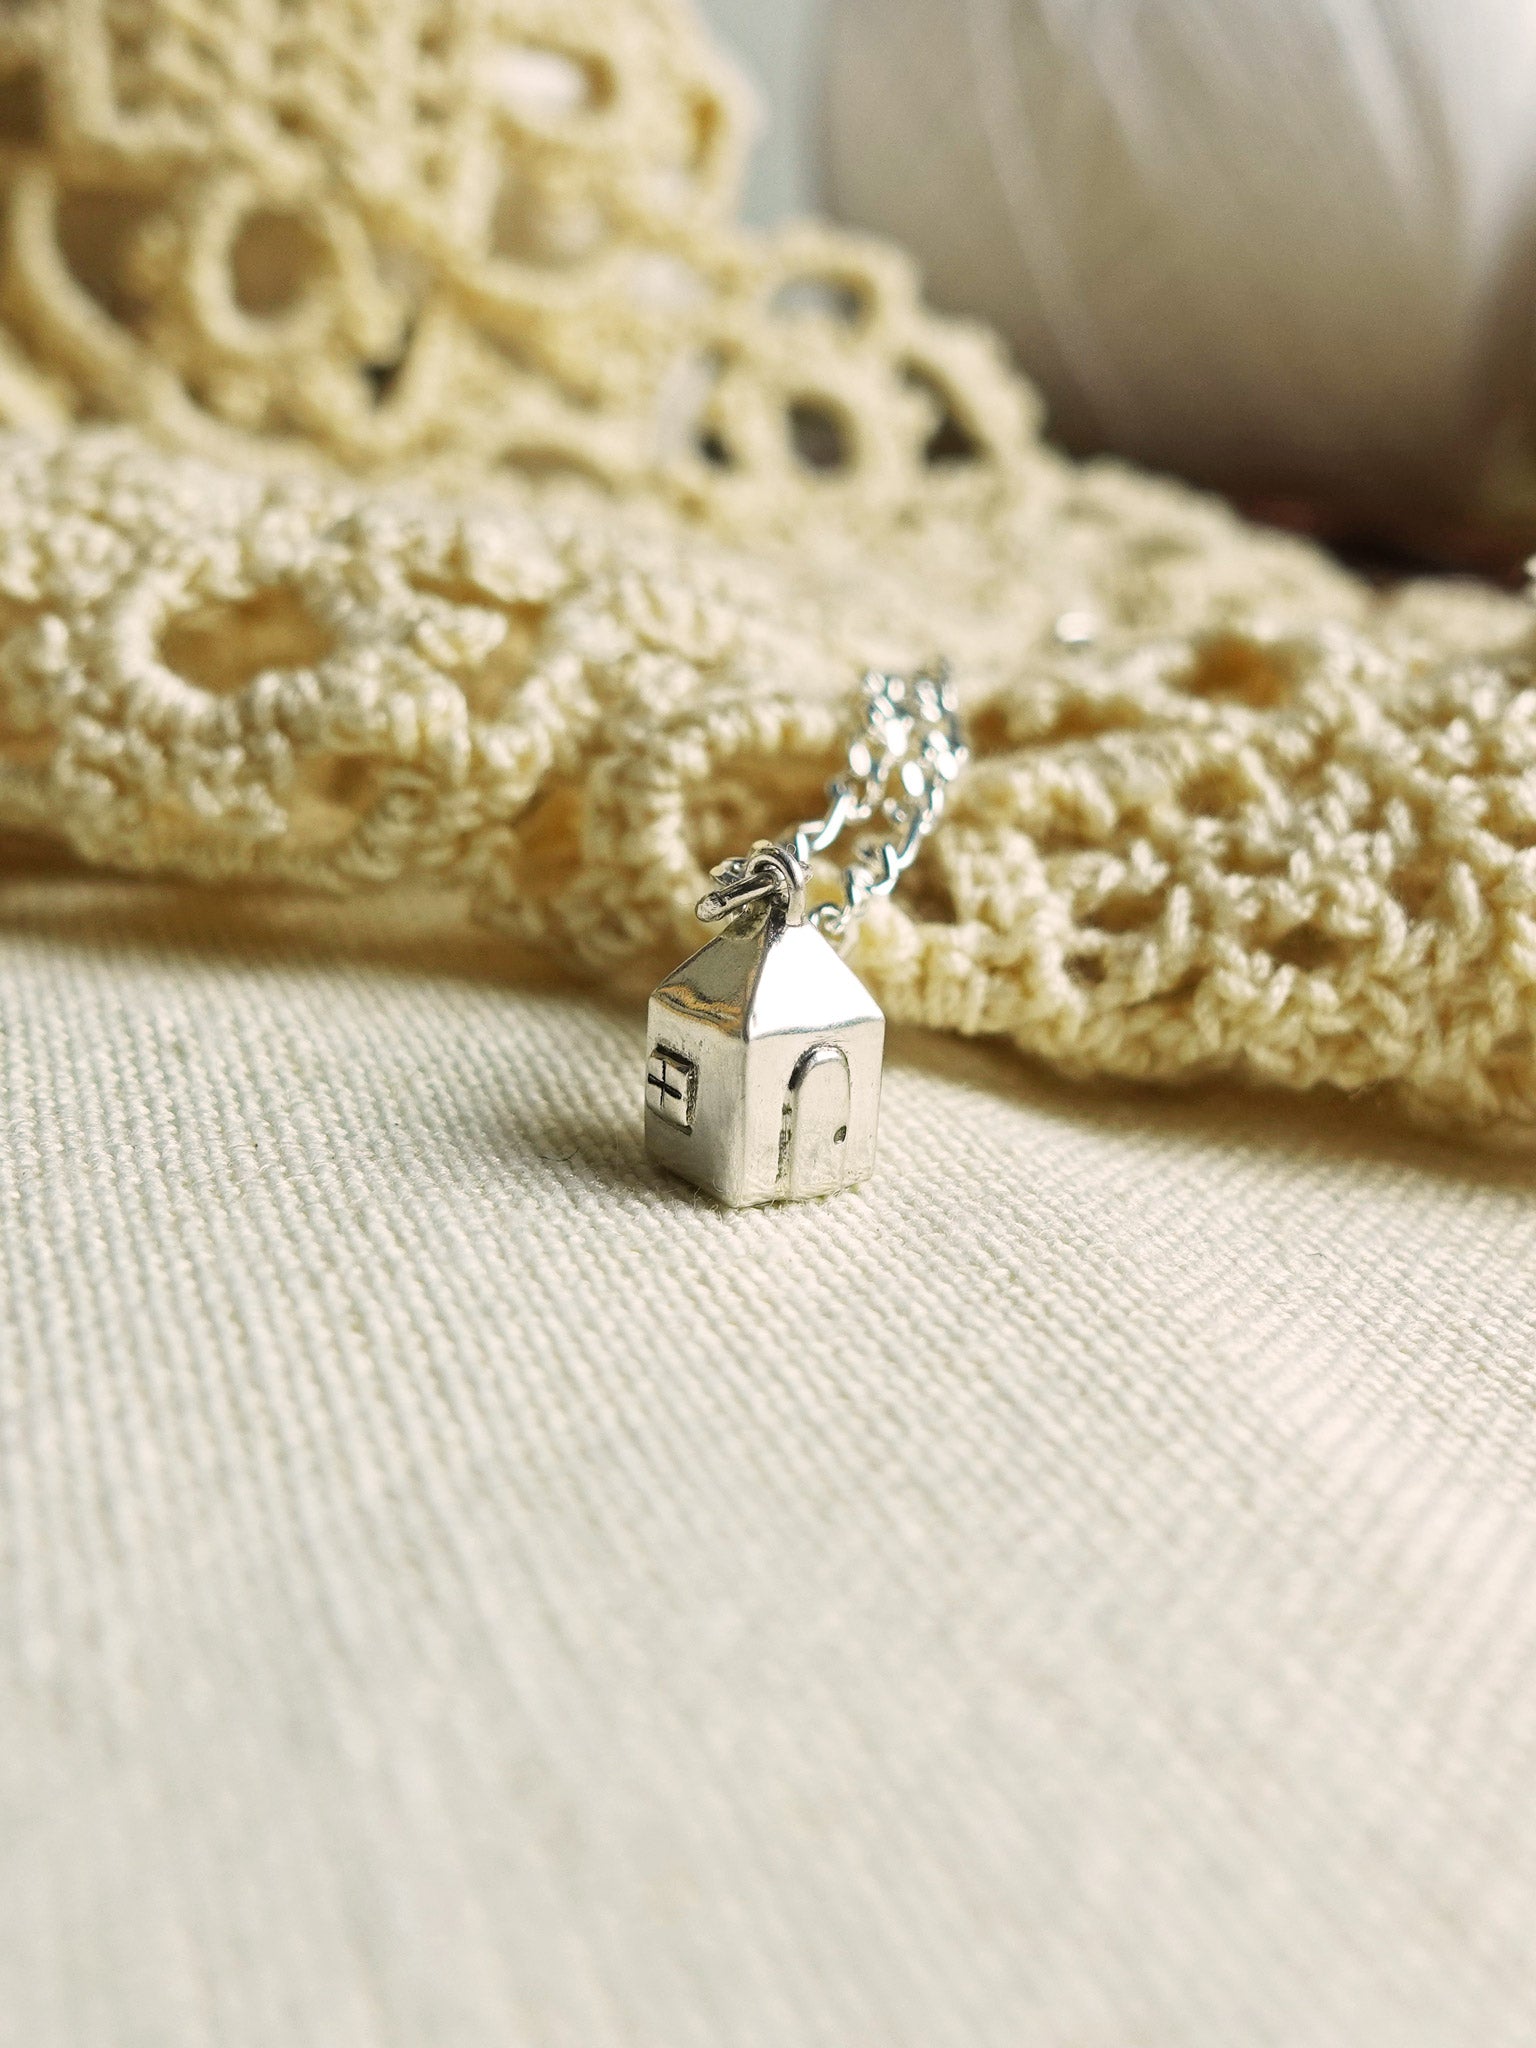 Miniature House Bracelet I Left